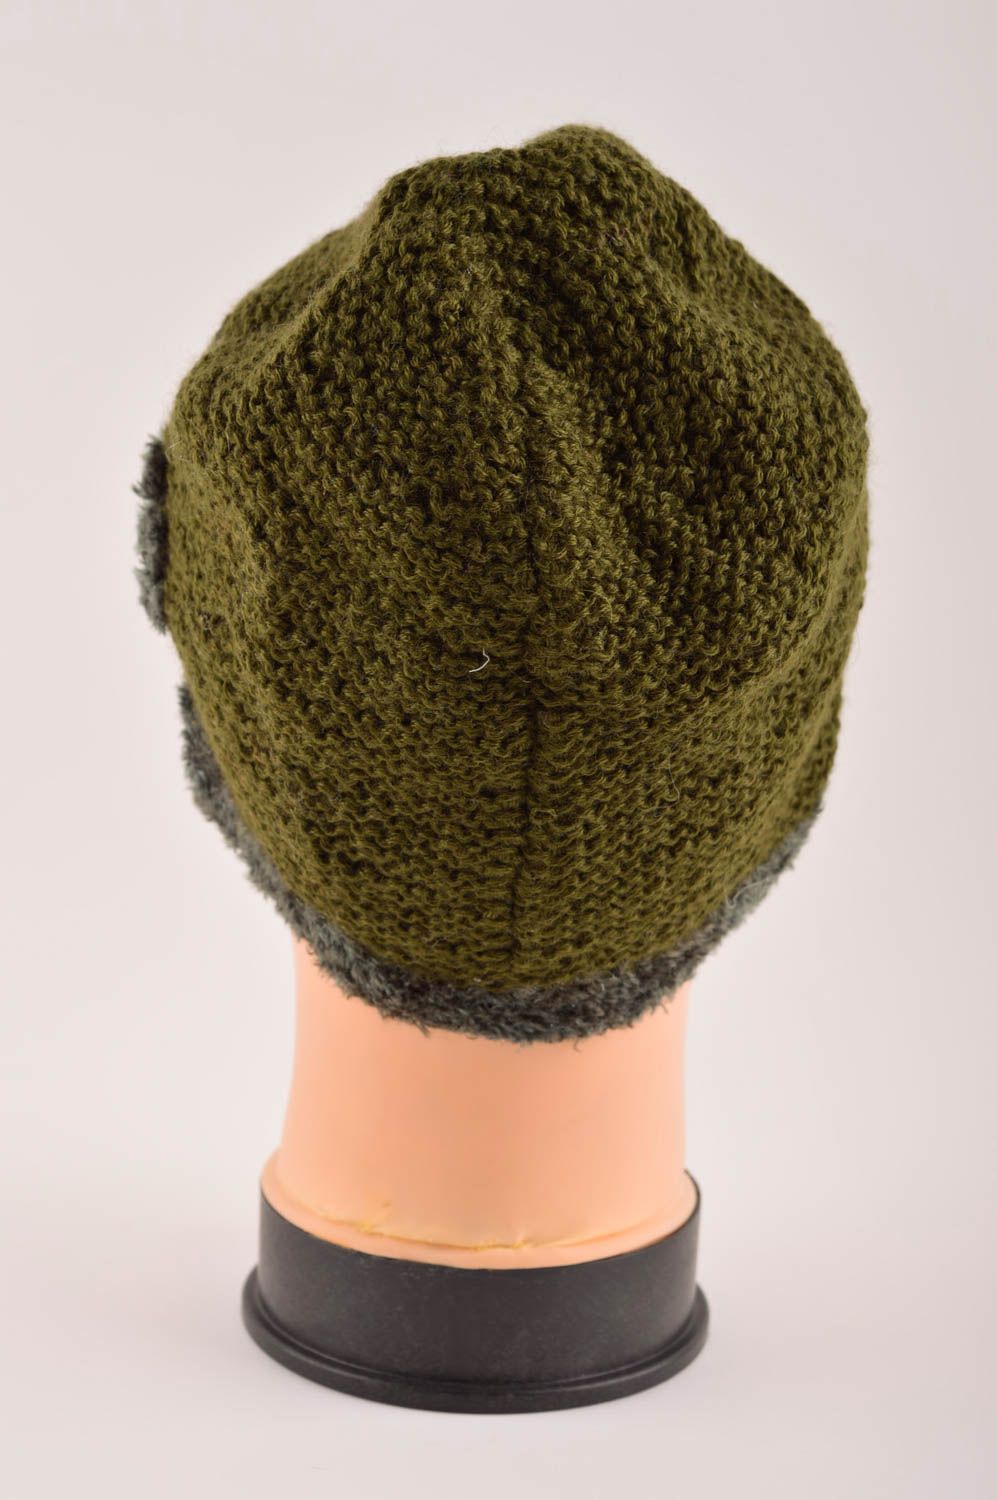 Handmade hat designer hat warm winter hat unusual hat for girl crocheted hat photo 4